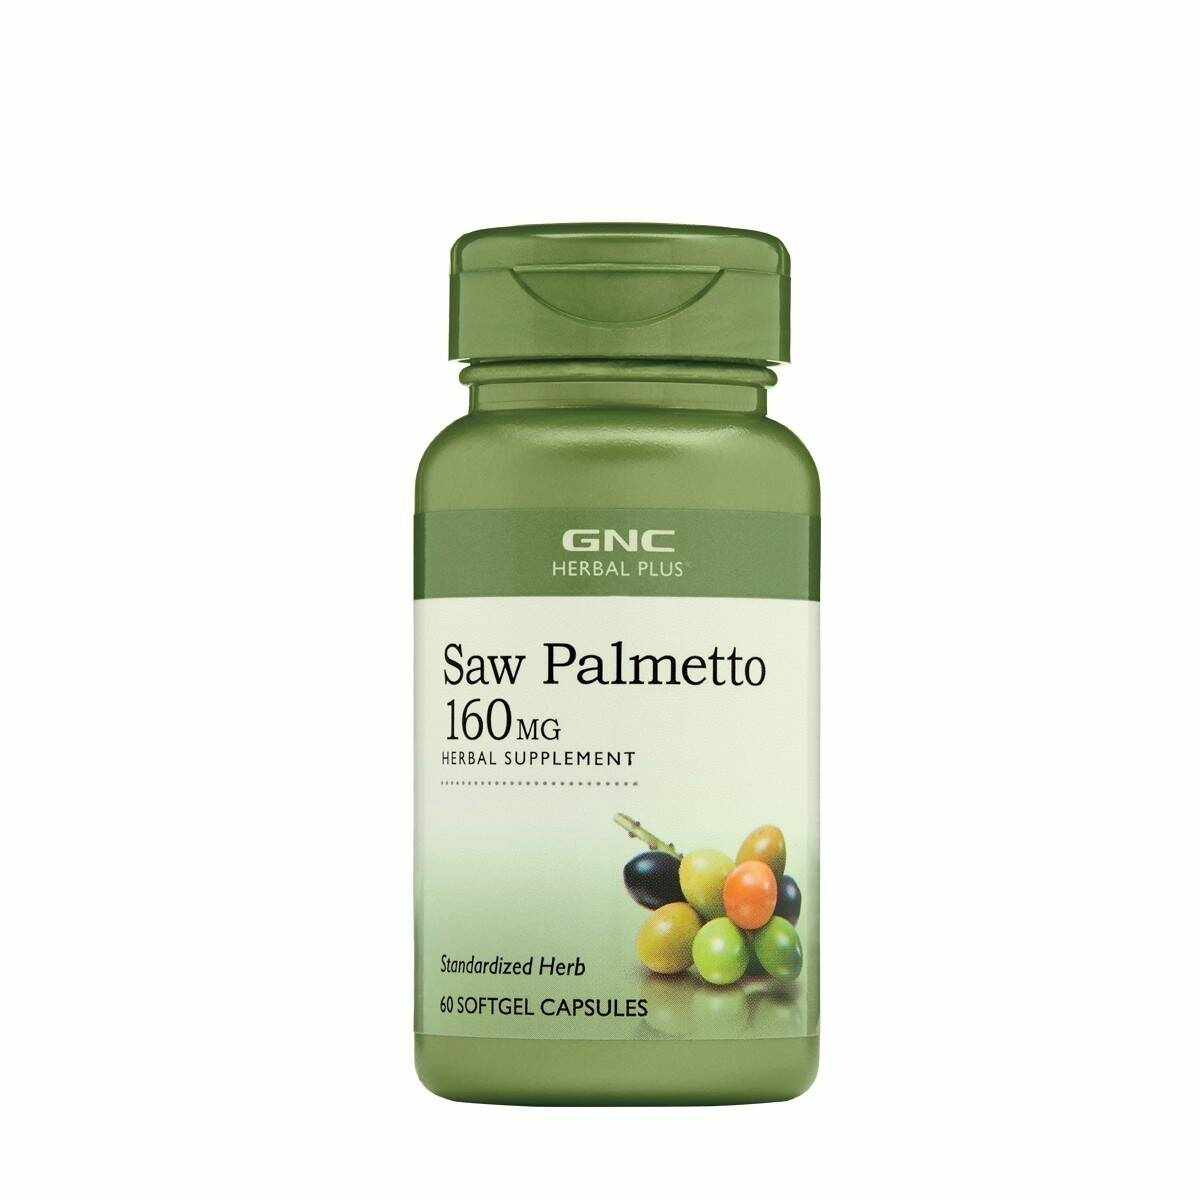 Herbal plus saw palmetto 160mg, extract standardizat de palmier pitic, 60cps - Gnc